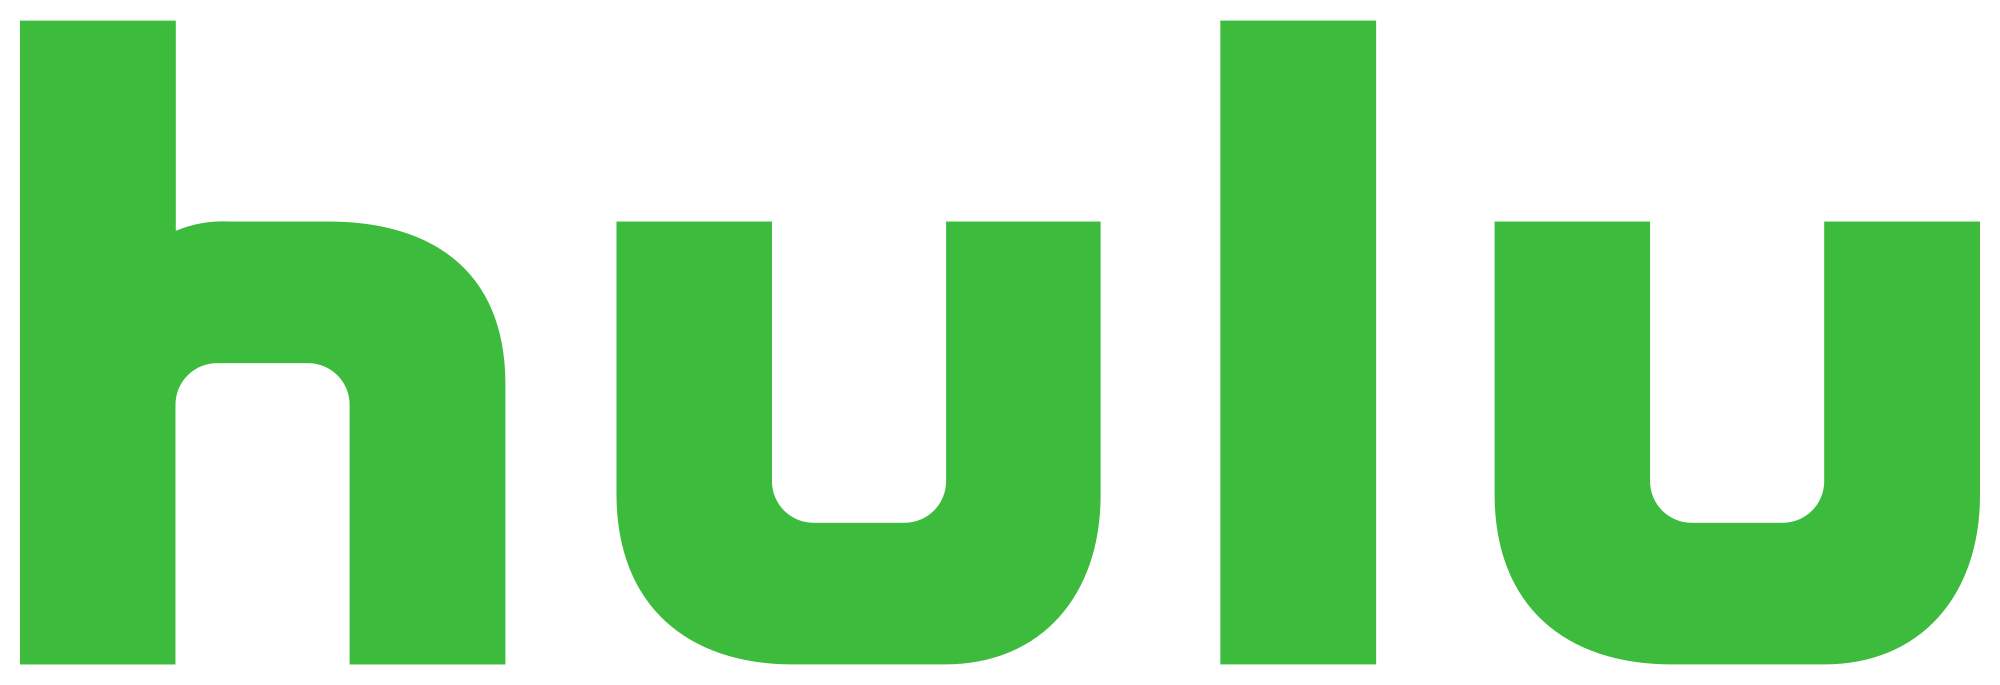 Hulu_logo.png